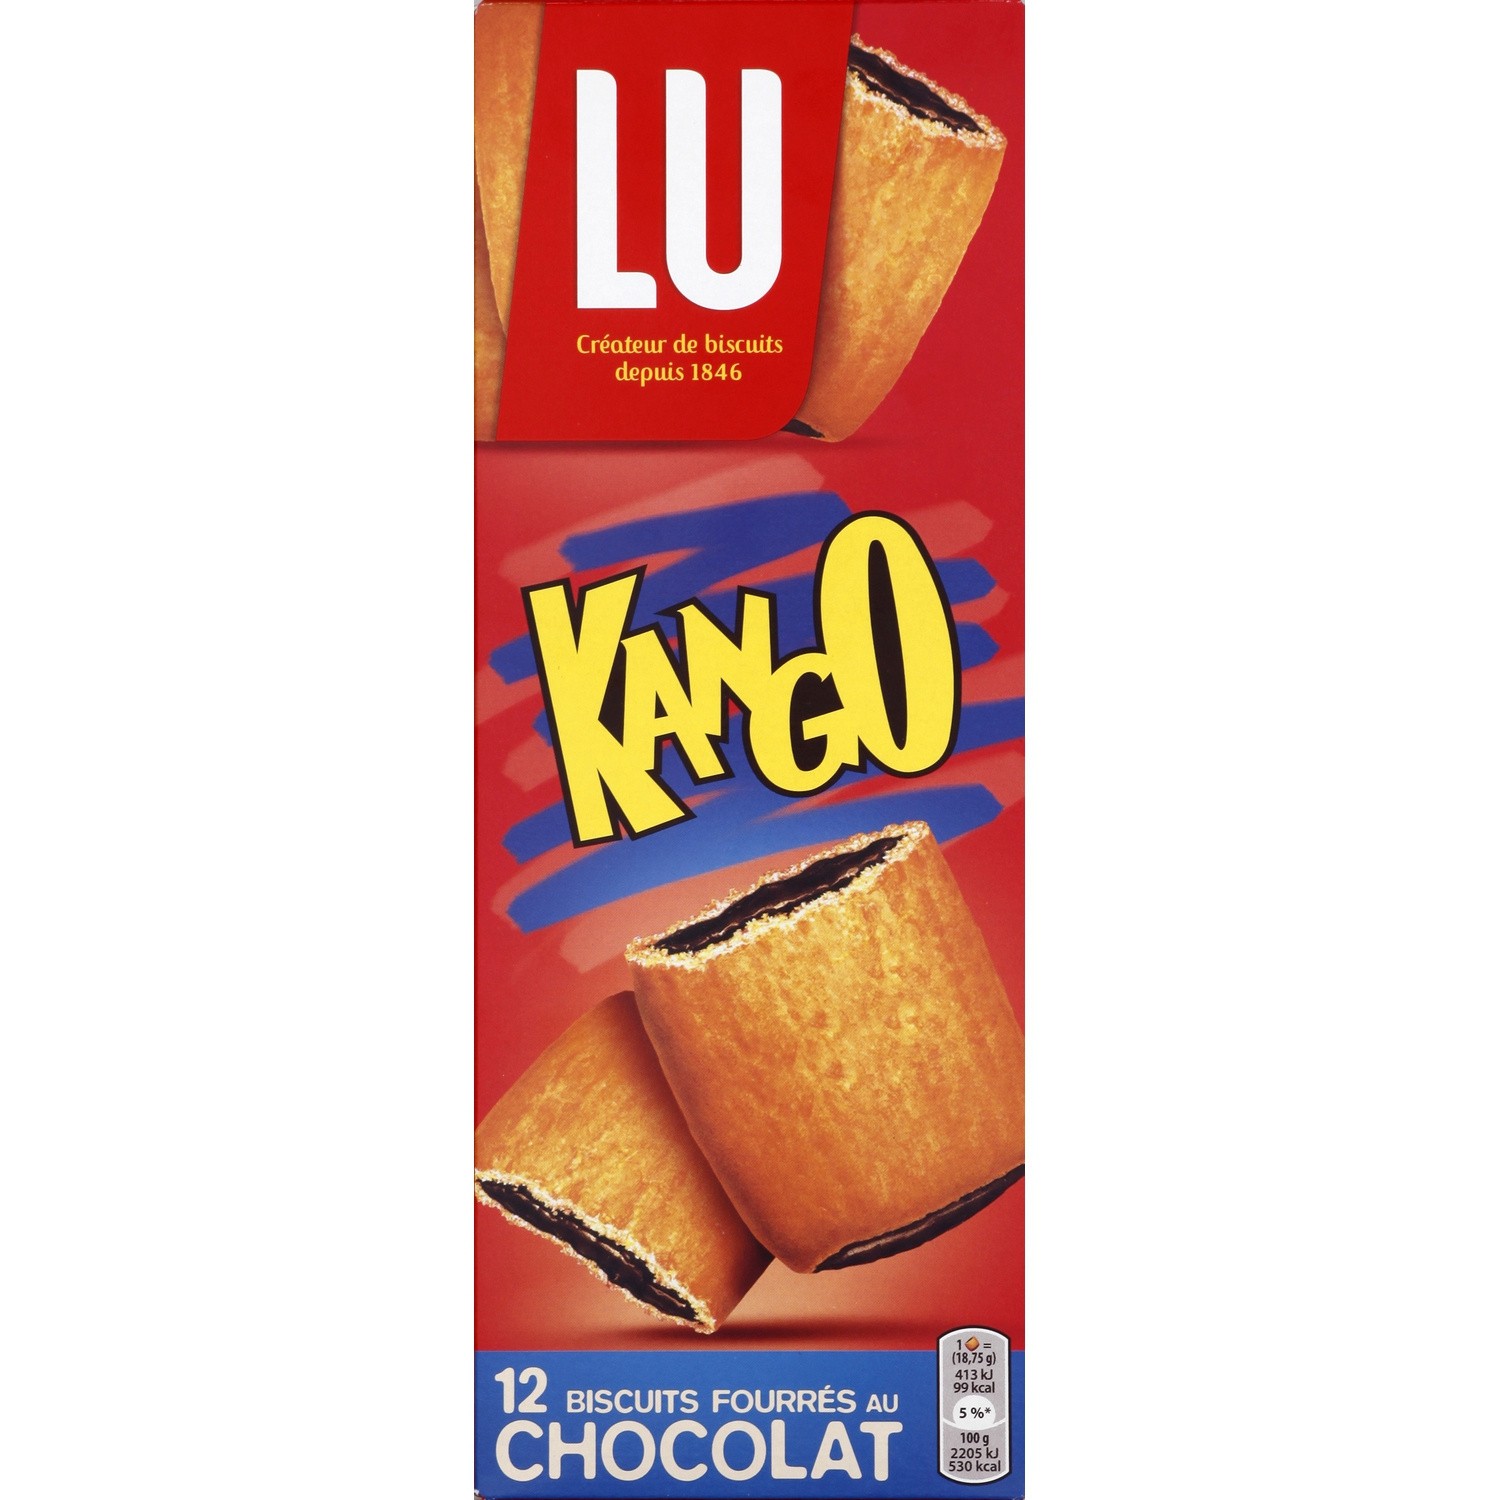 KANGO fourrés au Chocolat